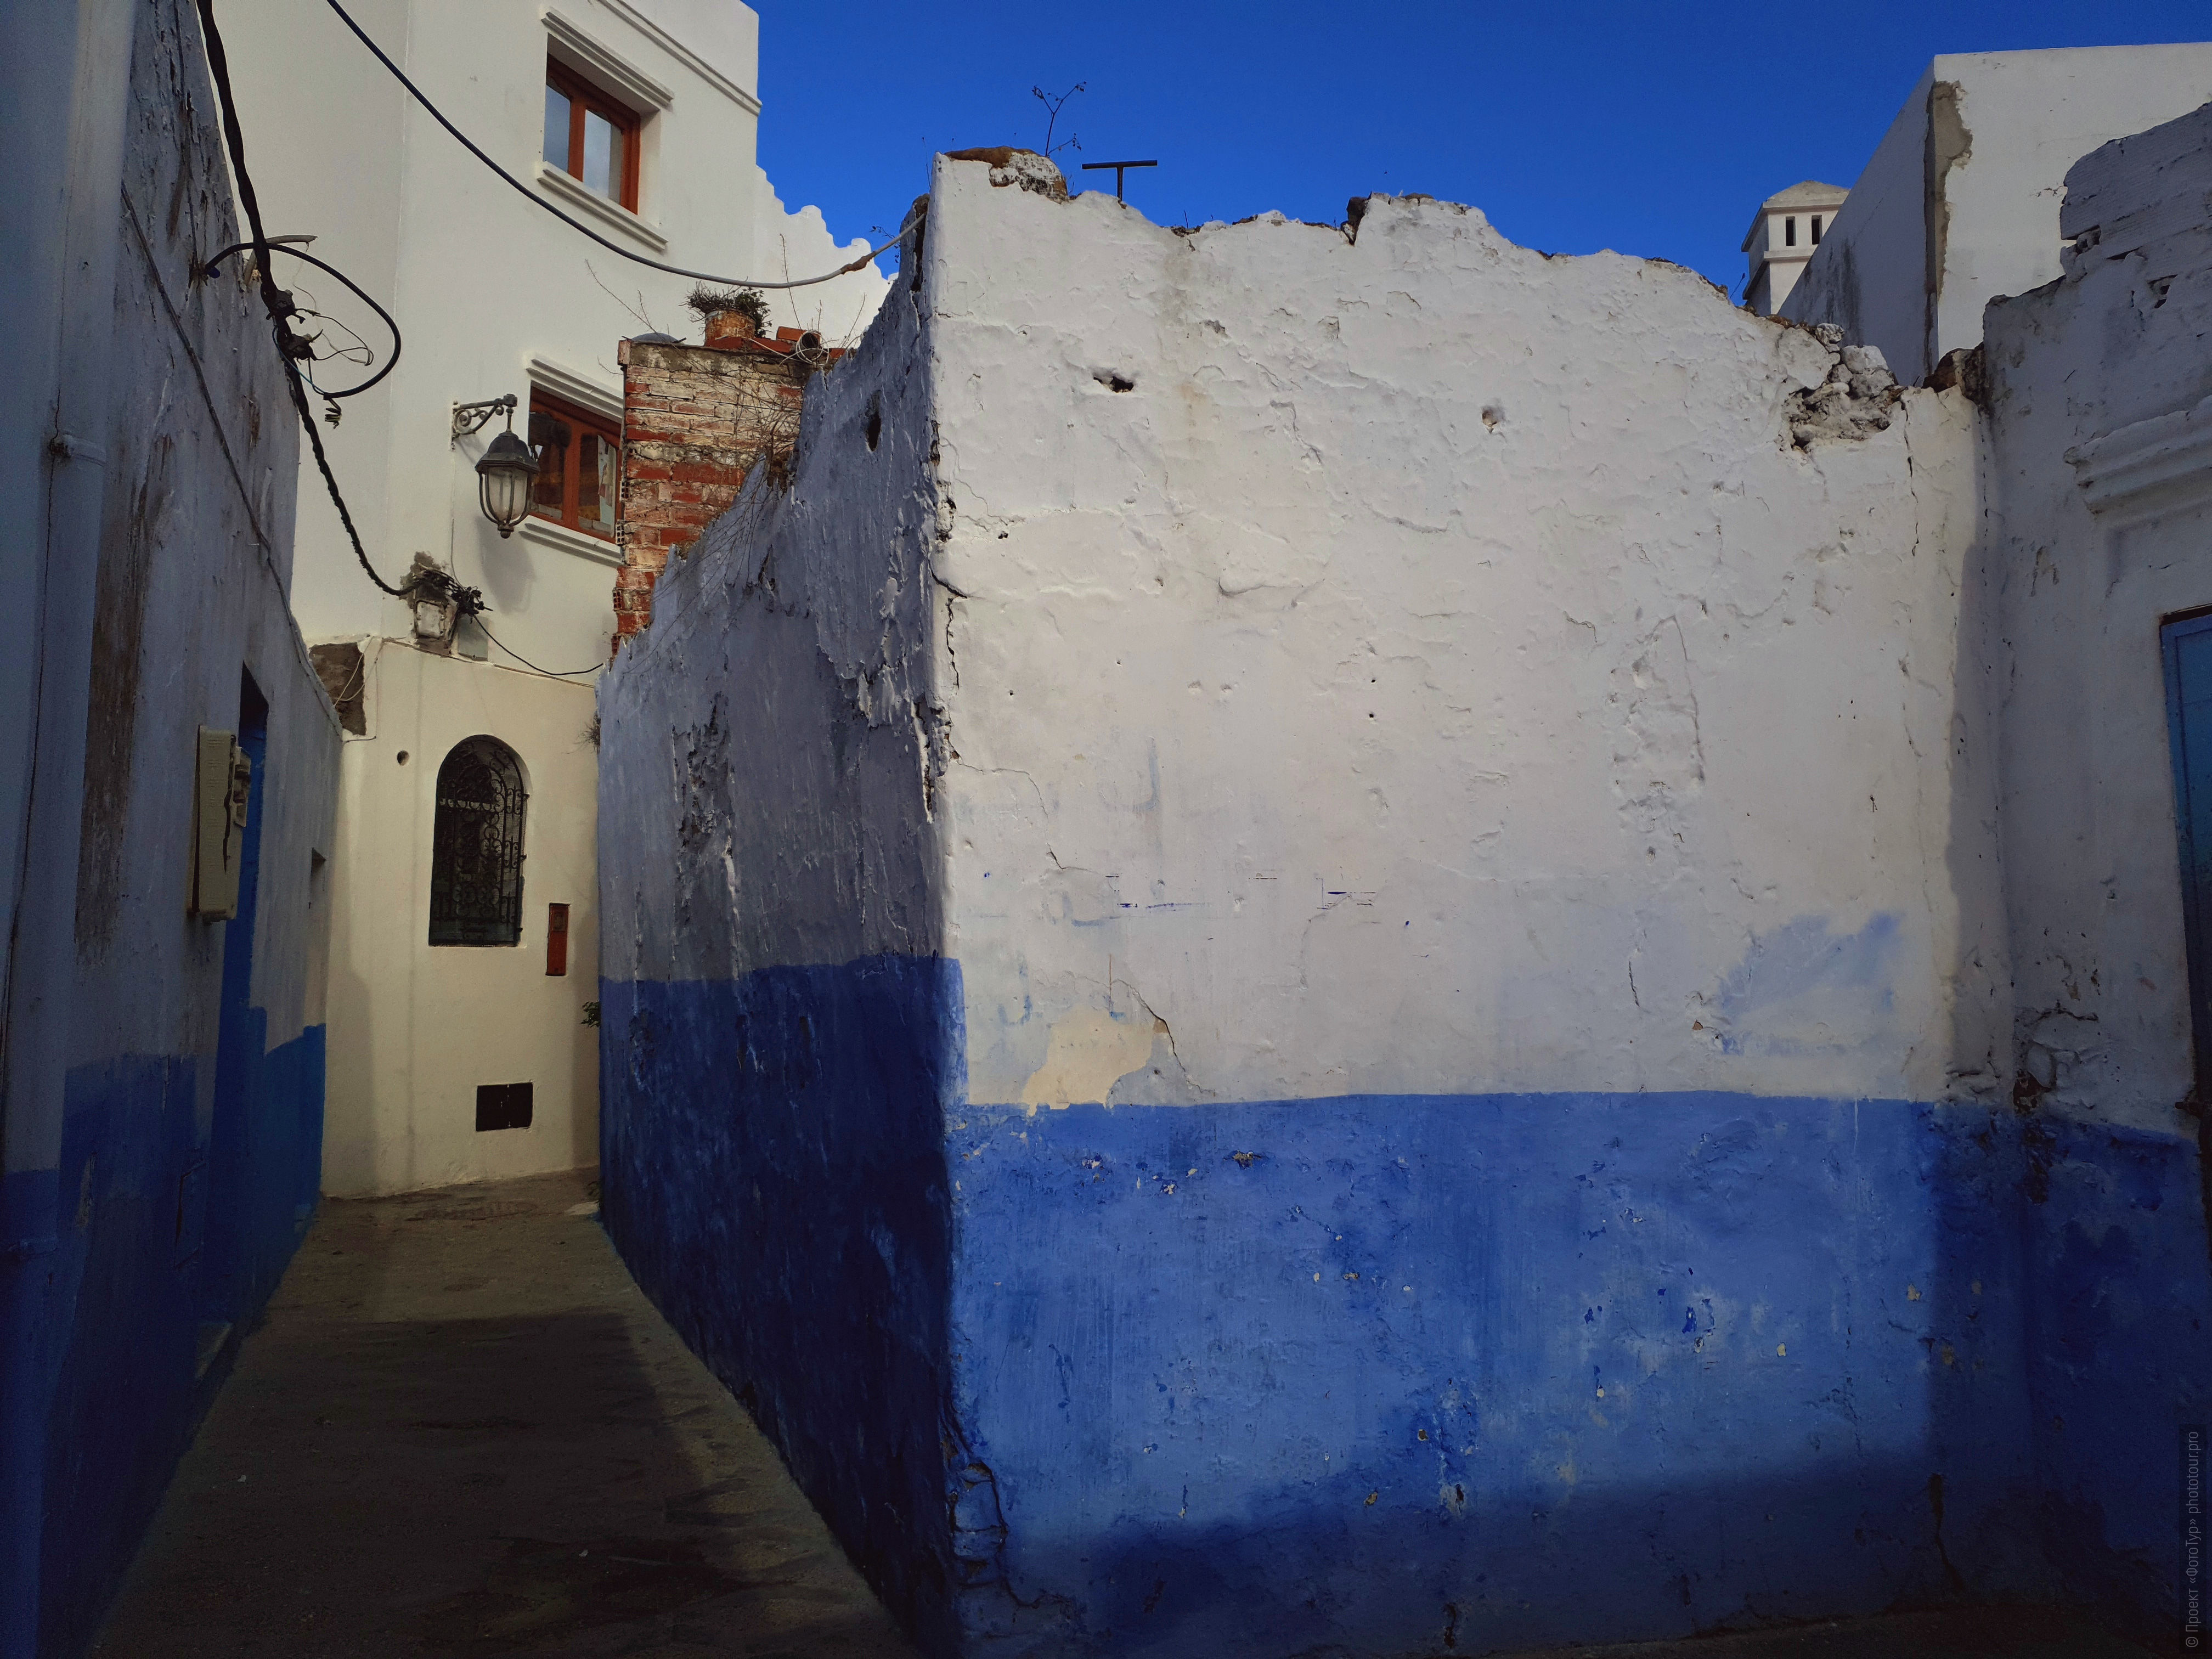 Asila. Adventure photo tour: medina, cascades, sands and ports of Morocco, April 4 - 17, 2020.